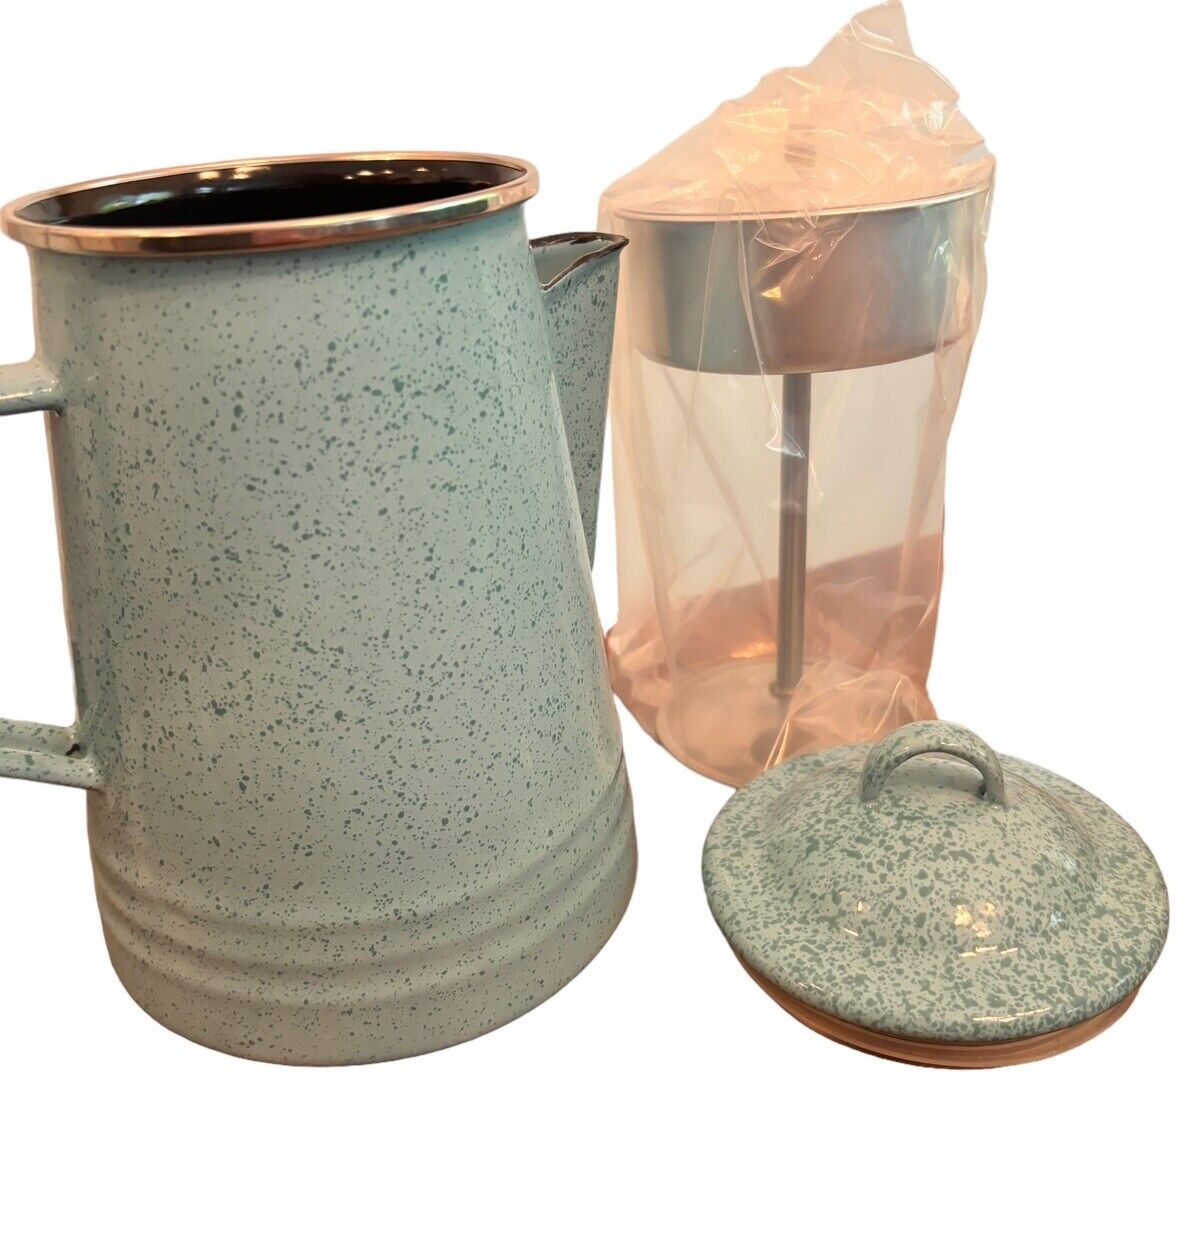 NWOB Paula Deen Porcelain Enamel / Steel 8-Cup Stovetop Percolator Blue Speckled